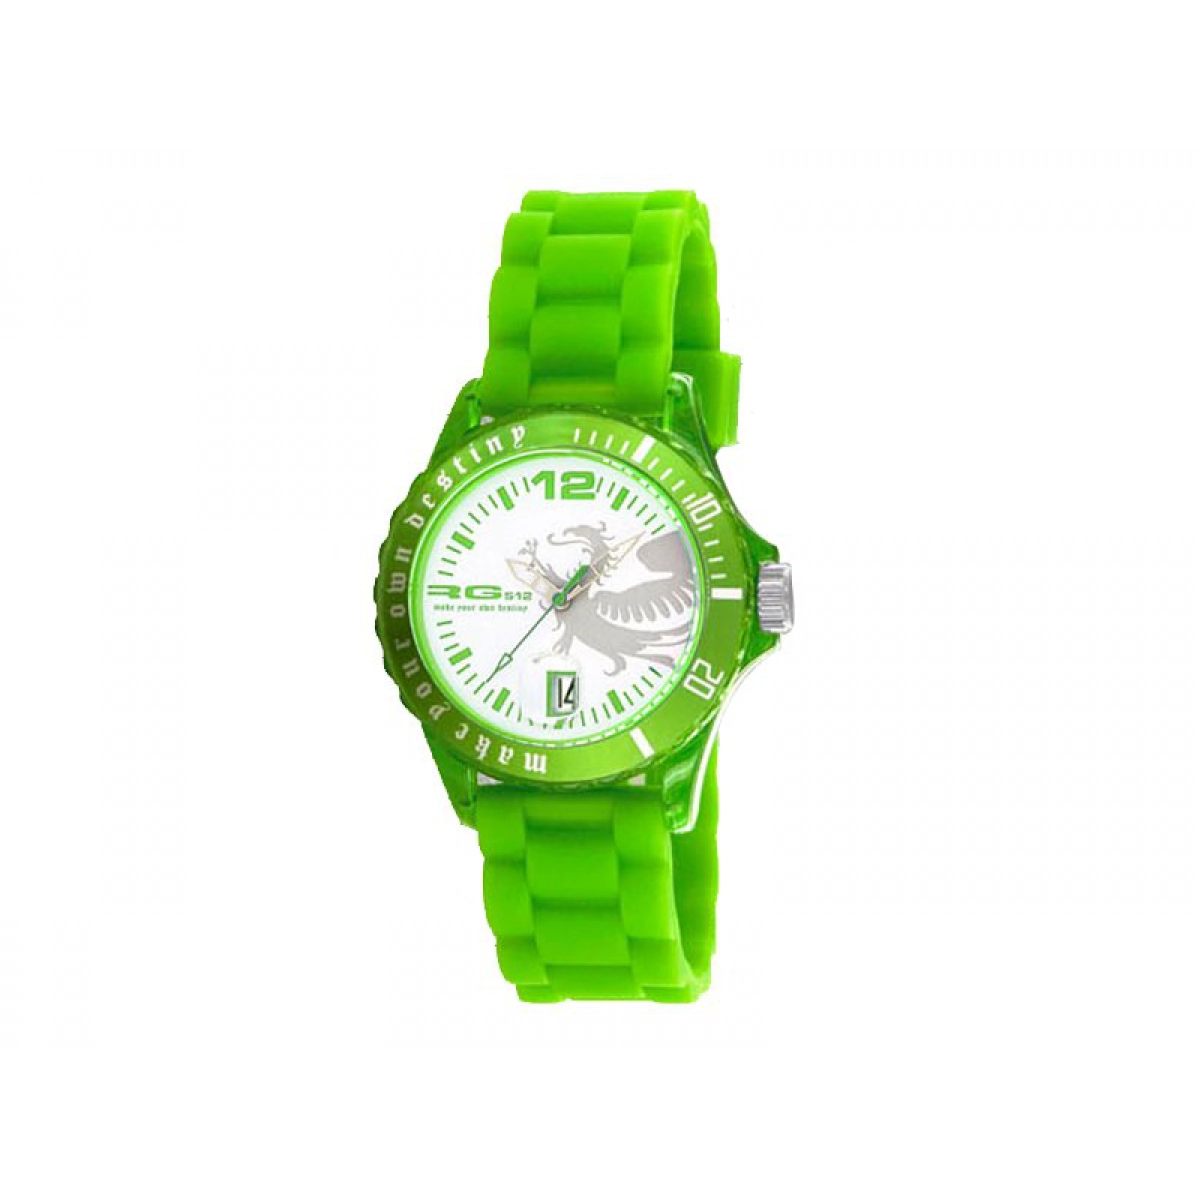 Watch RG 512 green G50529-007